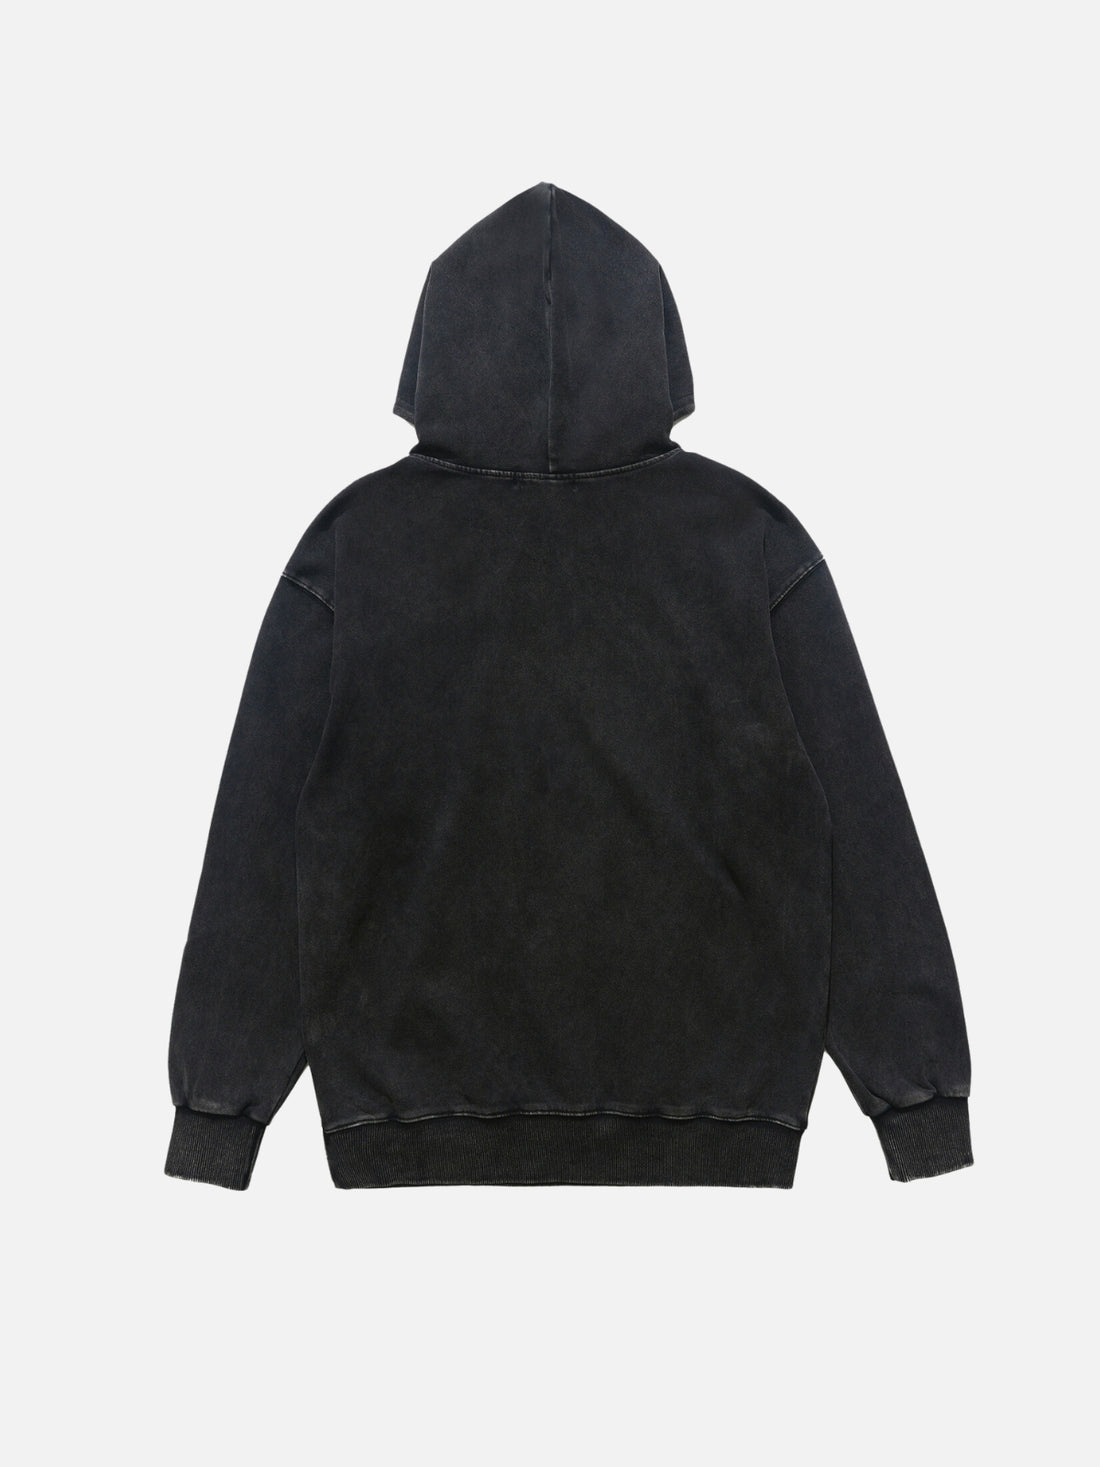 ZIPER - Oversized Graphic Hoodie Black | Teenwear.eu